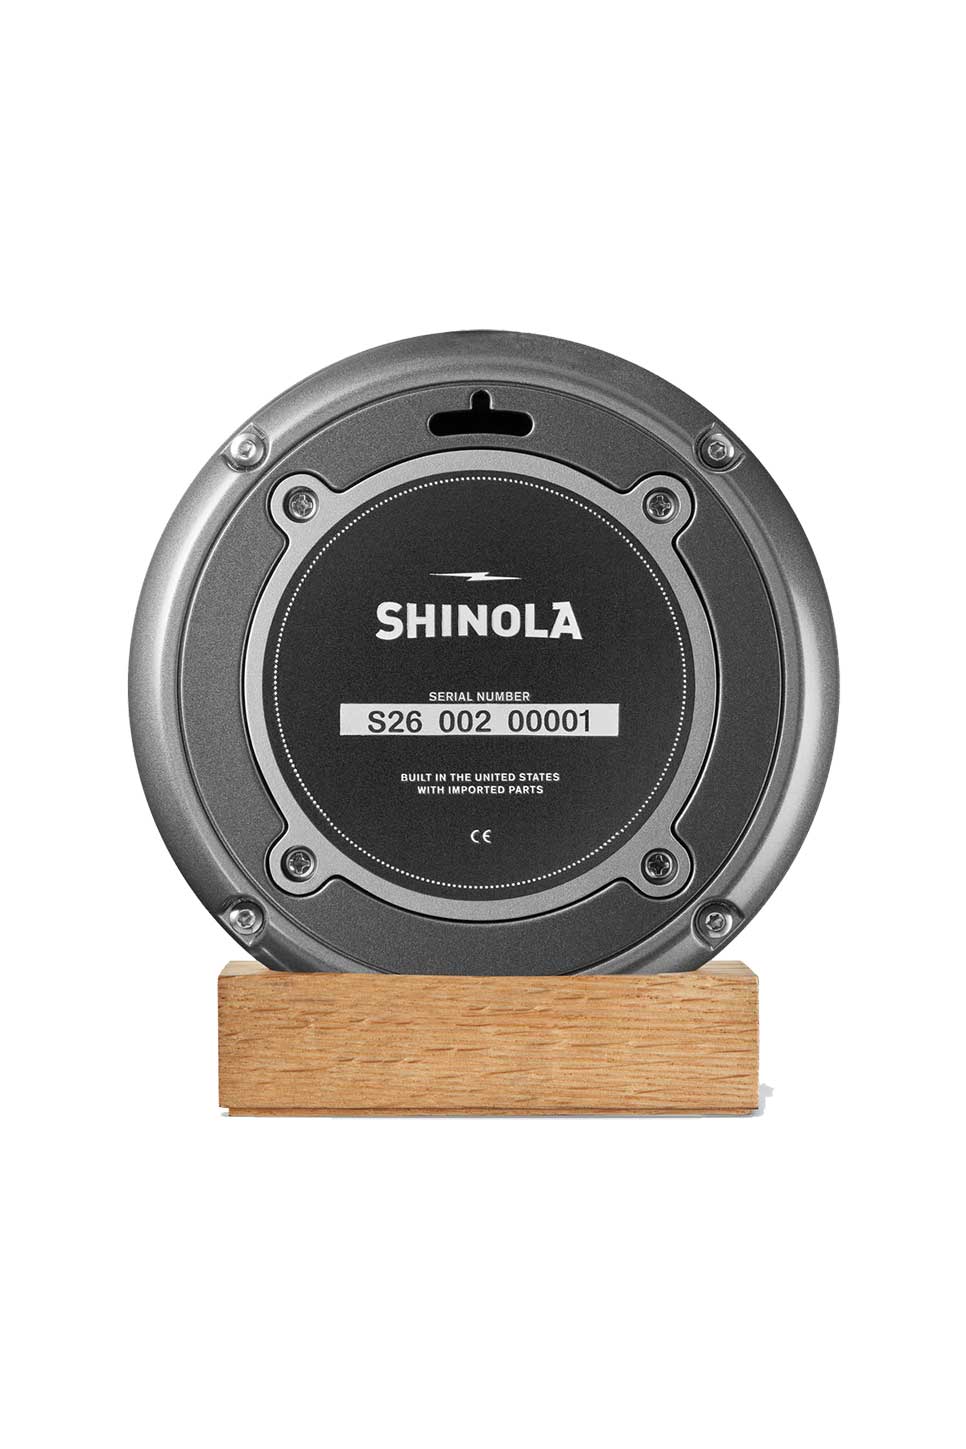 Shinola - Runwell Desk Clock - Dark Gray - Back